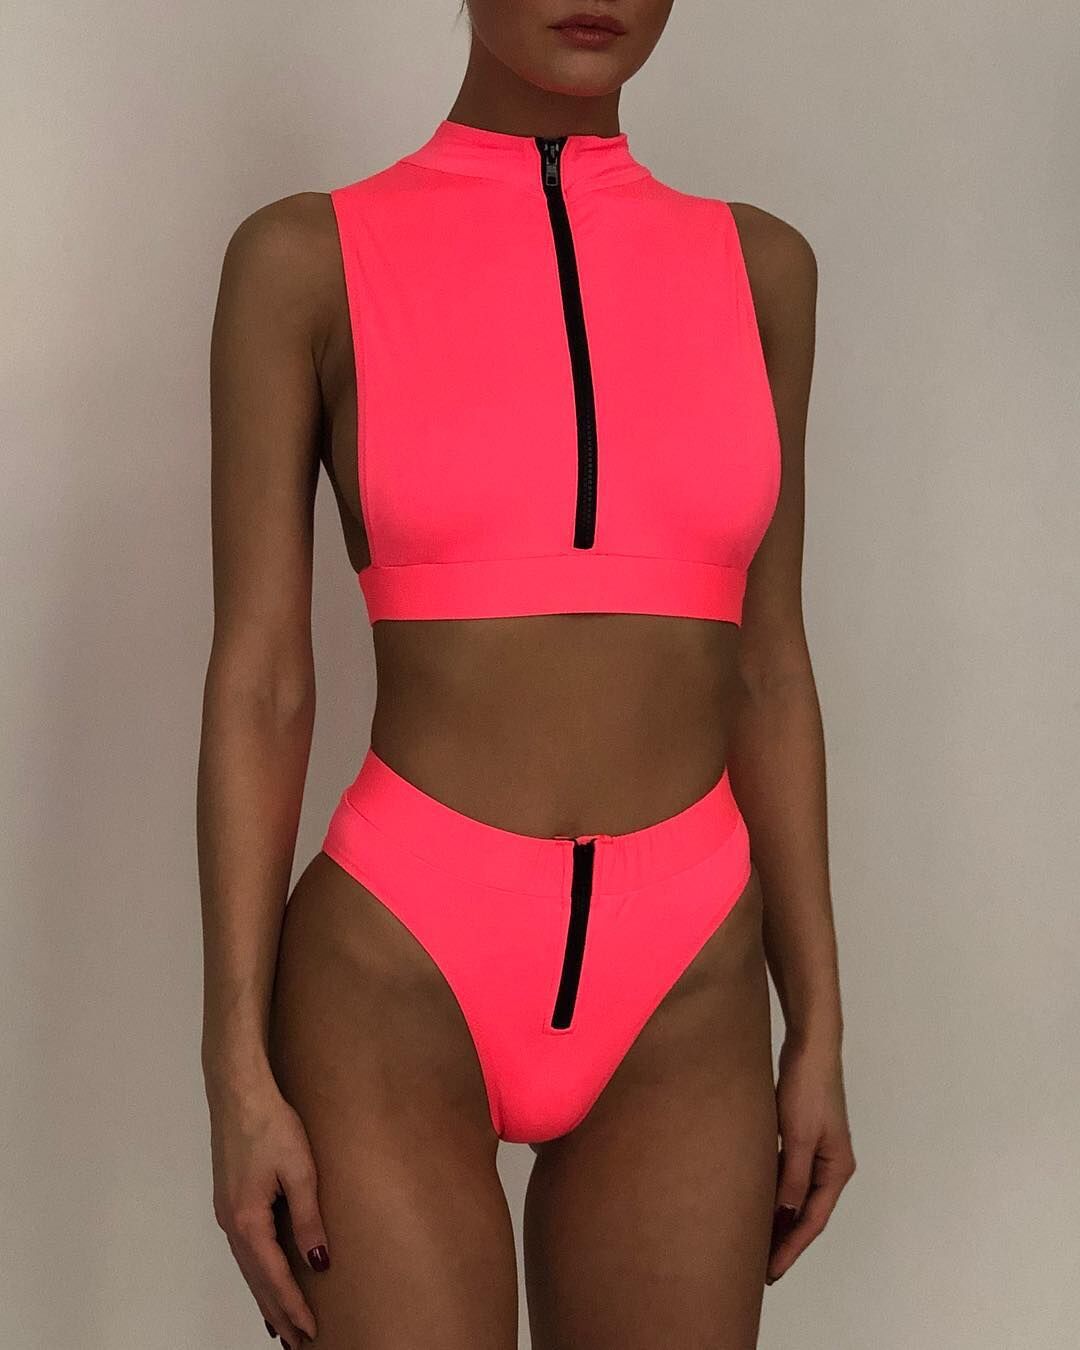 New Swimsuit Fluorescent Swimsuit Solid Bikini